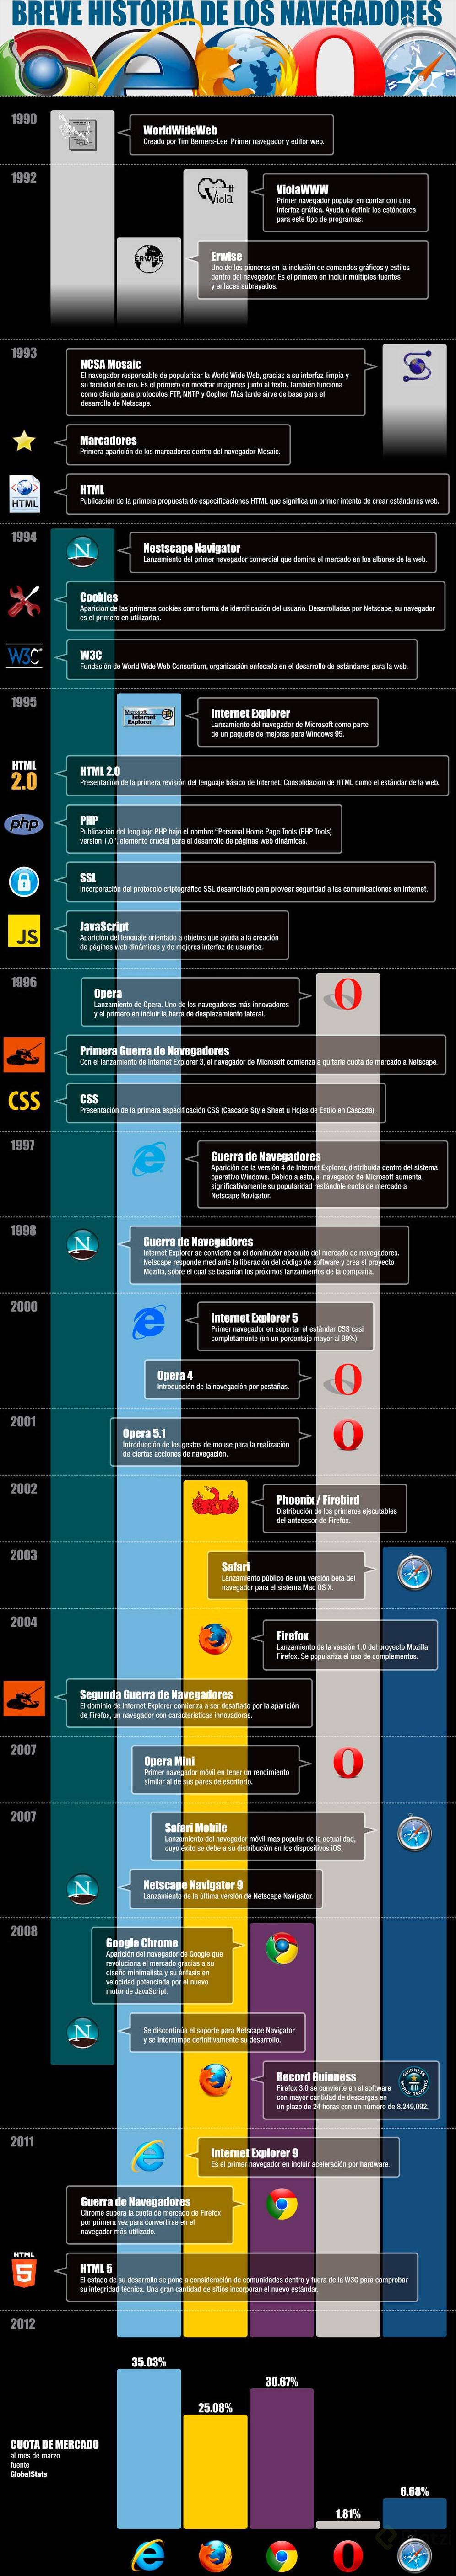 infografia-historia-navegadores.jpg